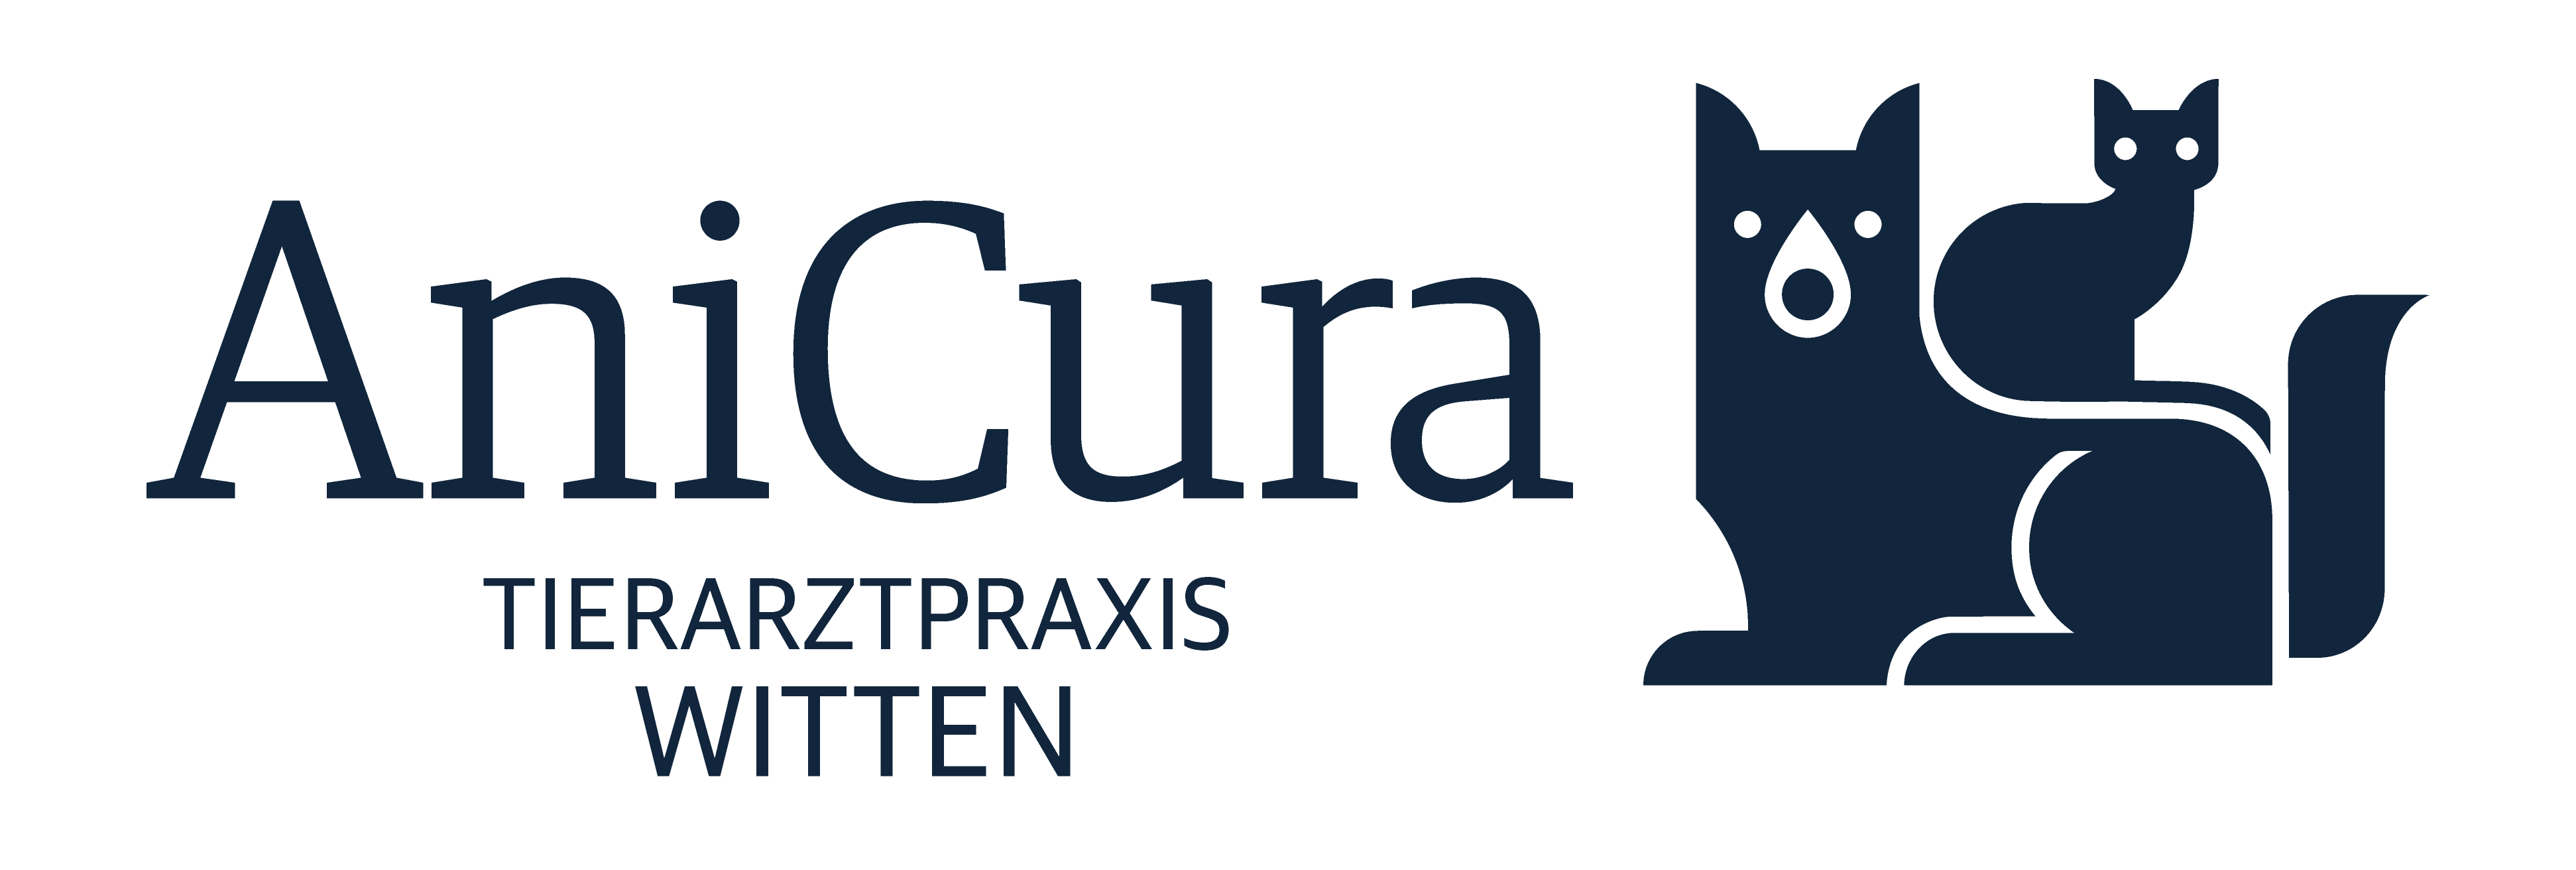 AniCura Witten logo